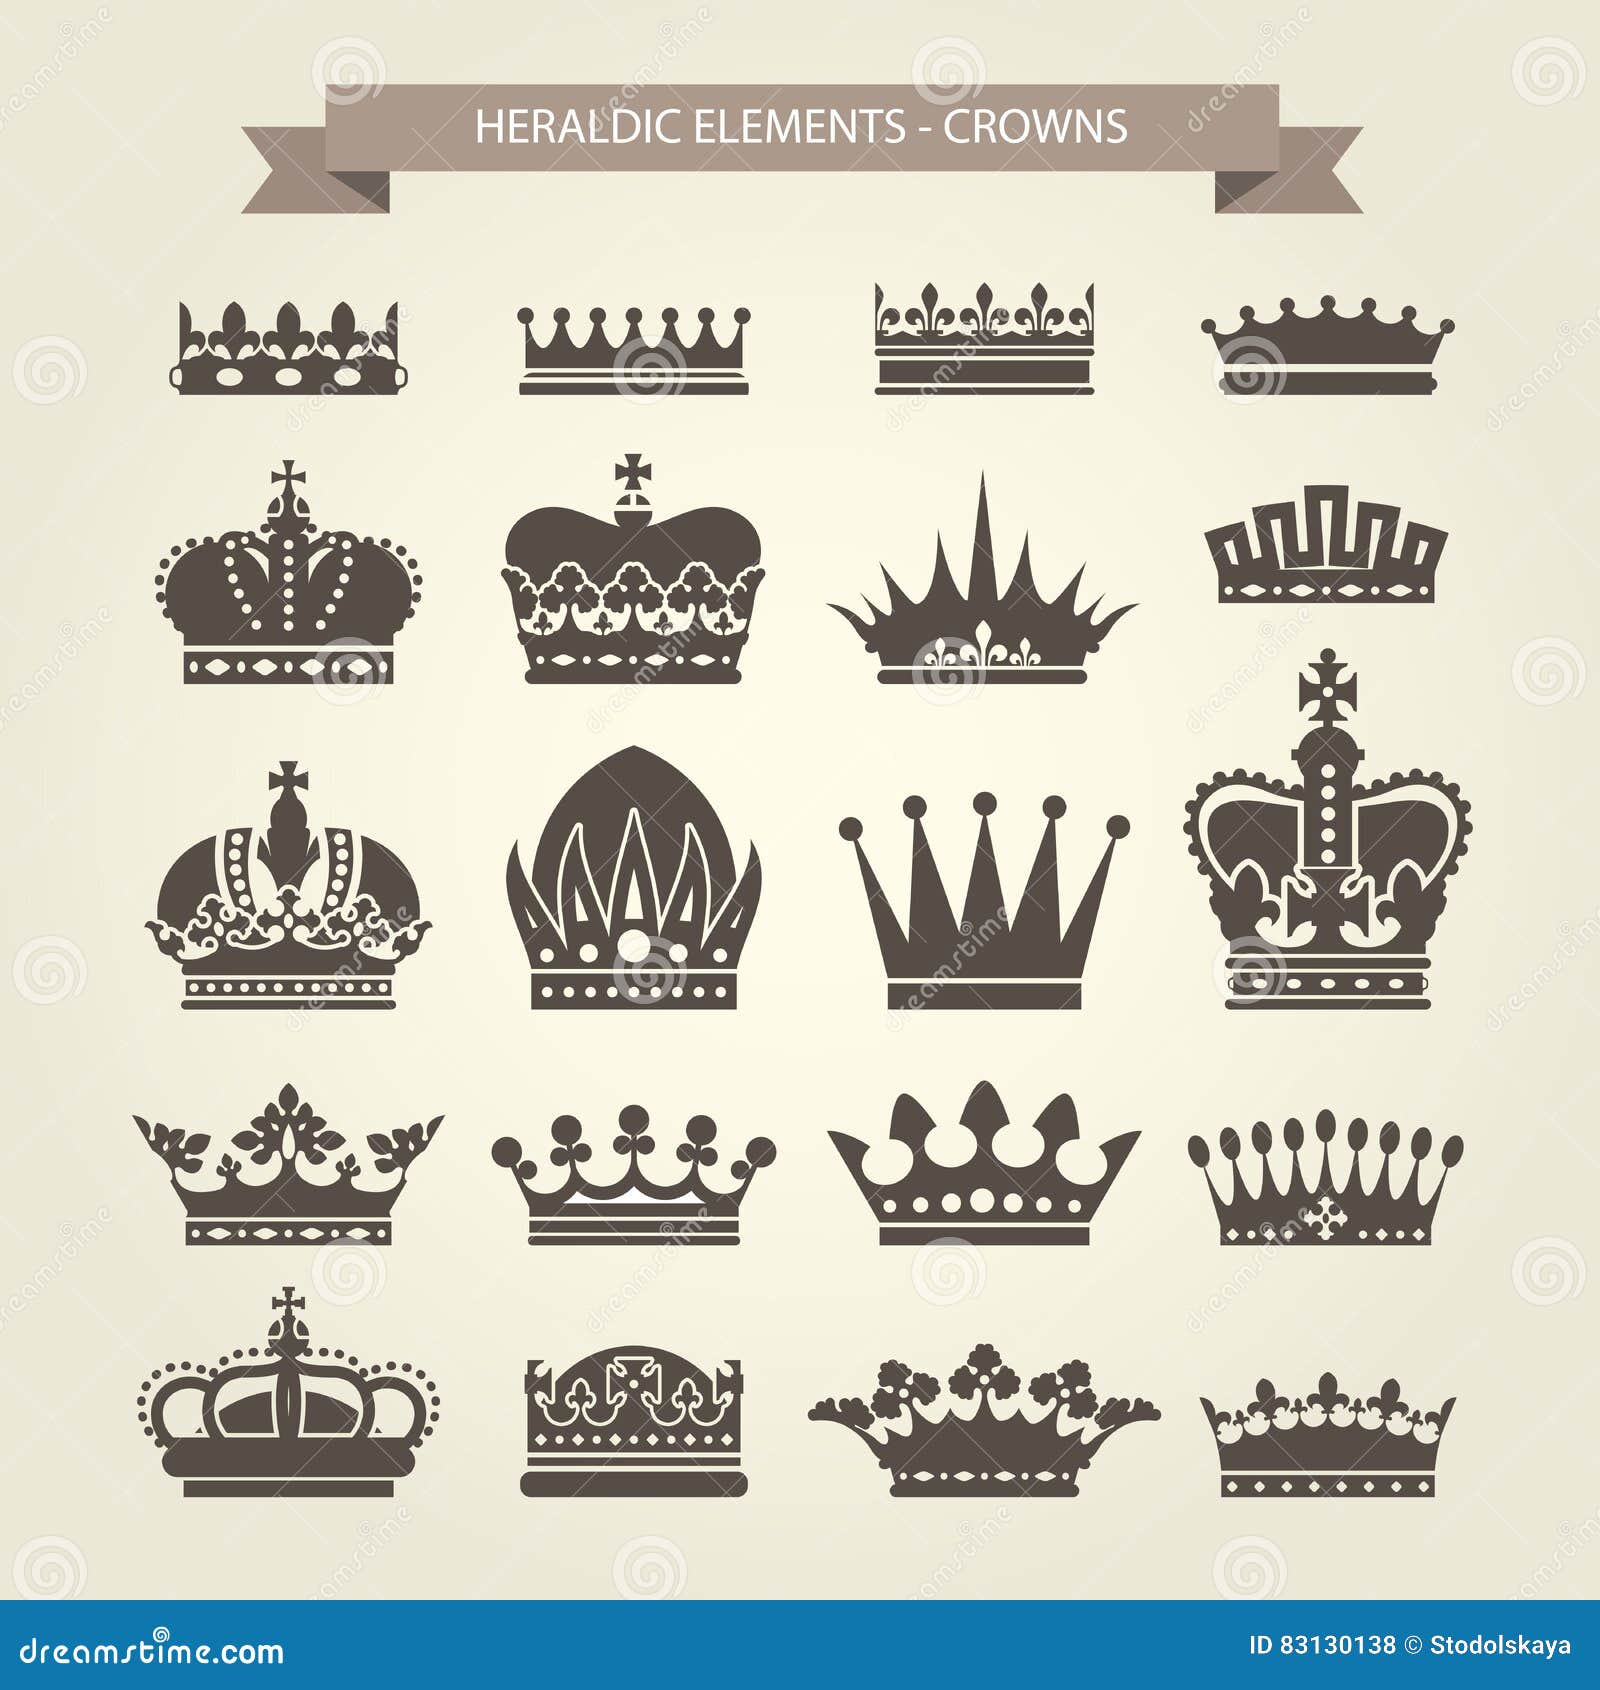 heraldic crowns set - monarchy coronet